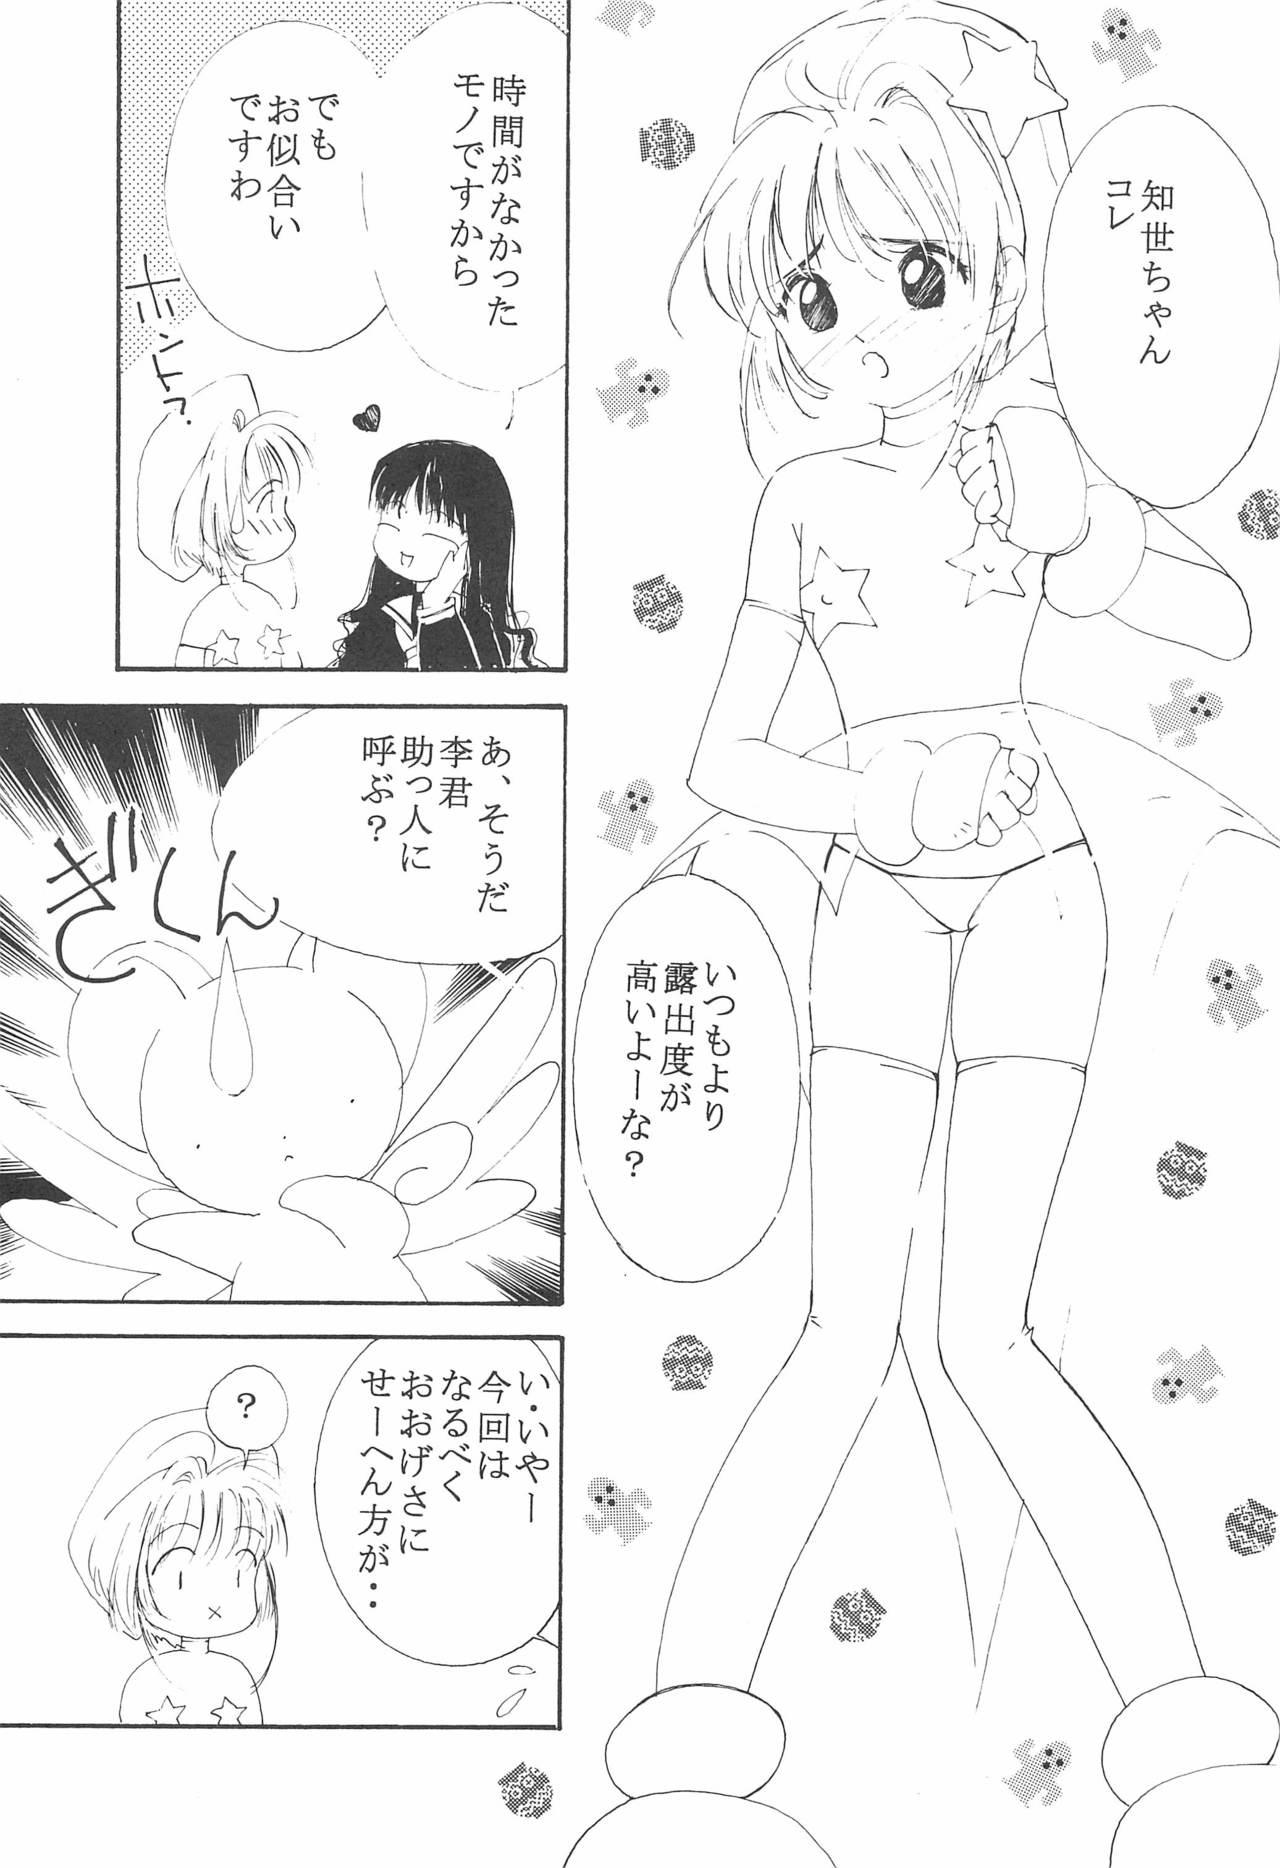 Suckingdick MoMo no Yu 8 - Cardcaptor sakura Stepbrother - Page 7